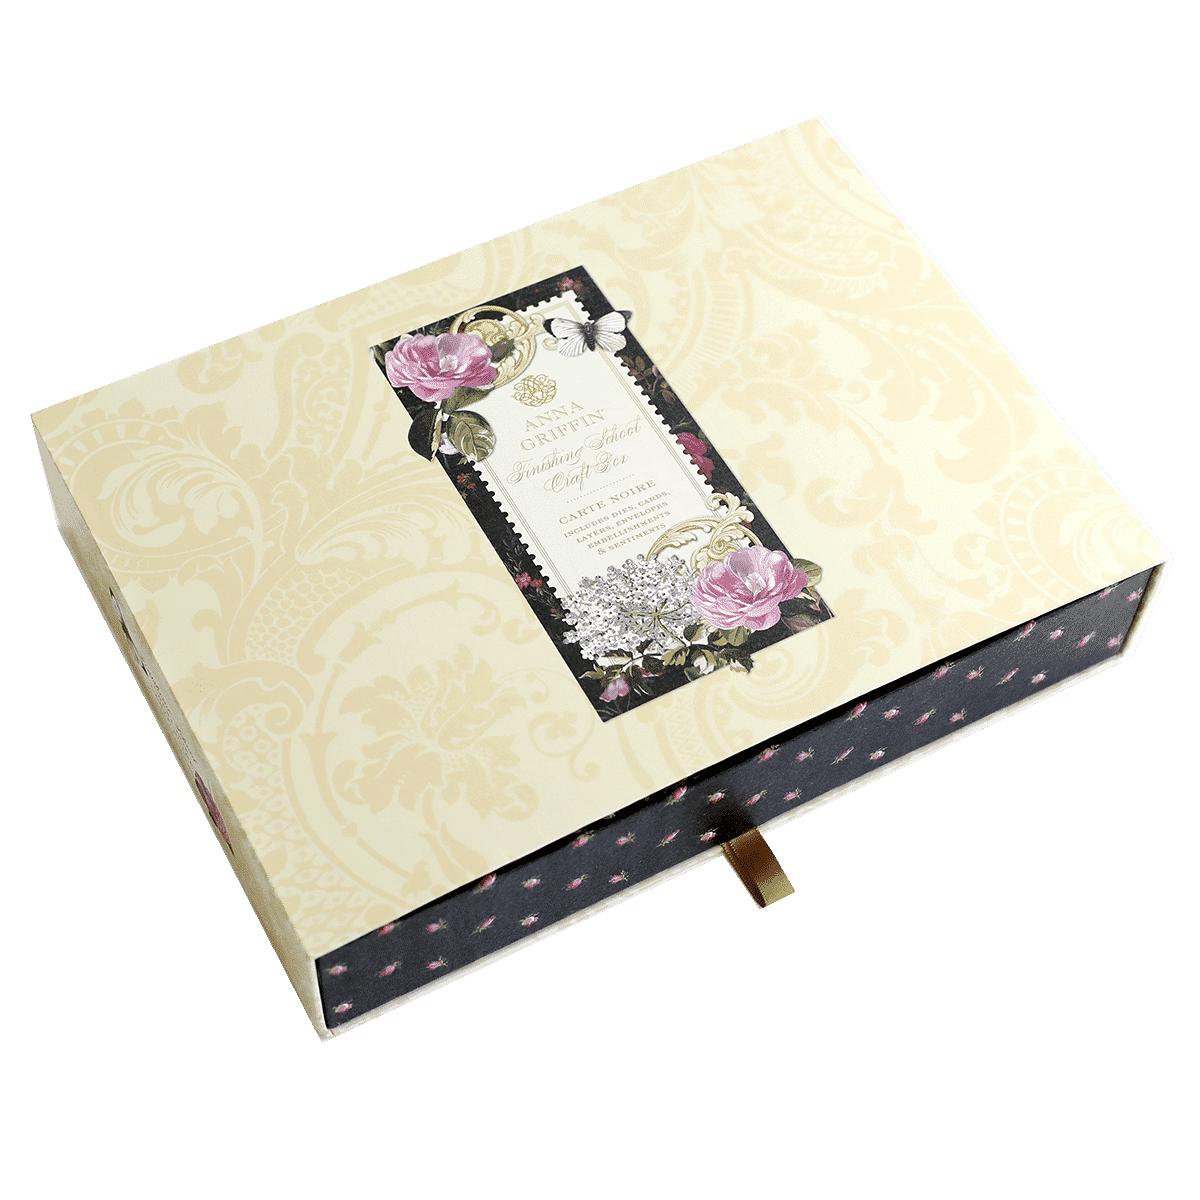 a wedding card box with a floral design.